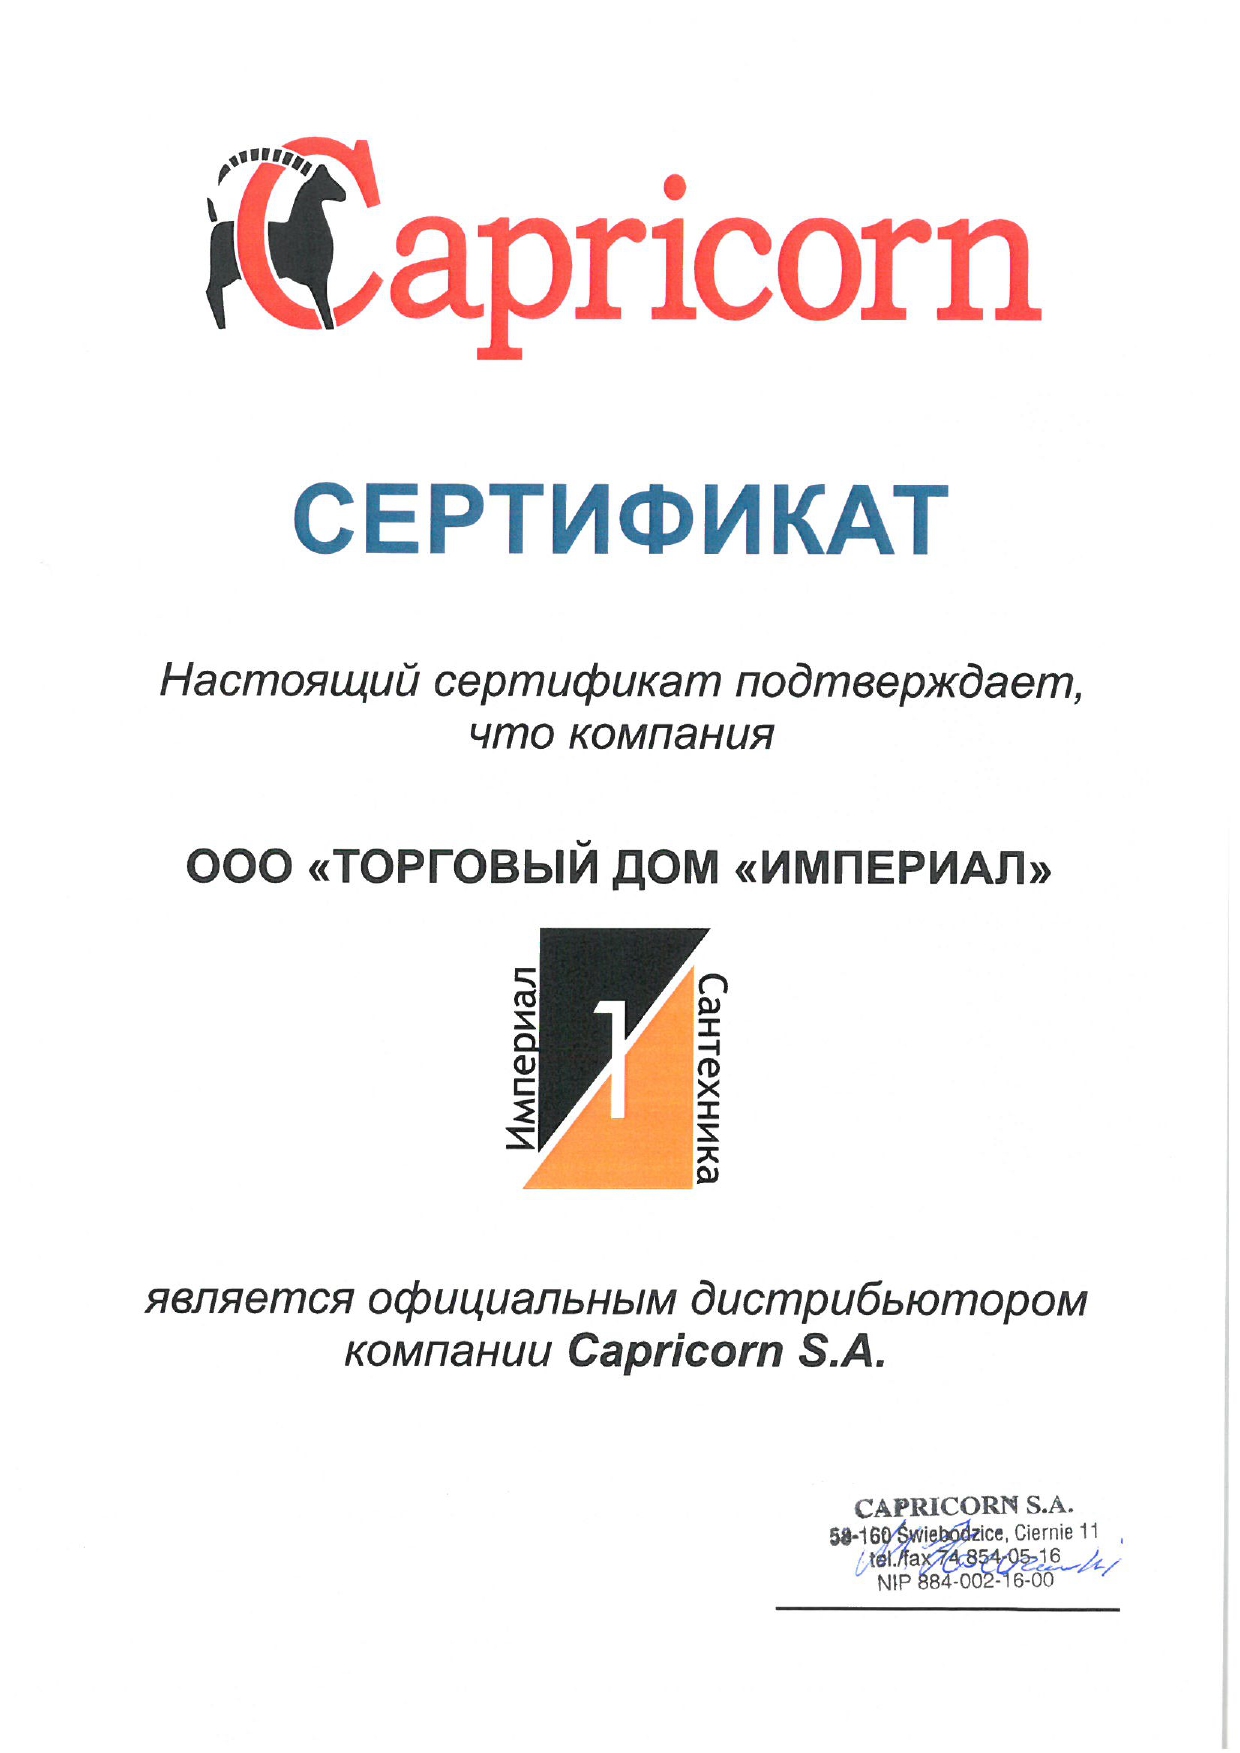 Cертификат официального дистрибьютора Capricorn.jpg